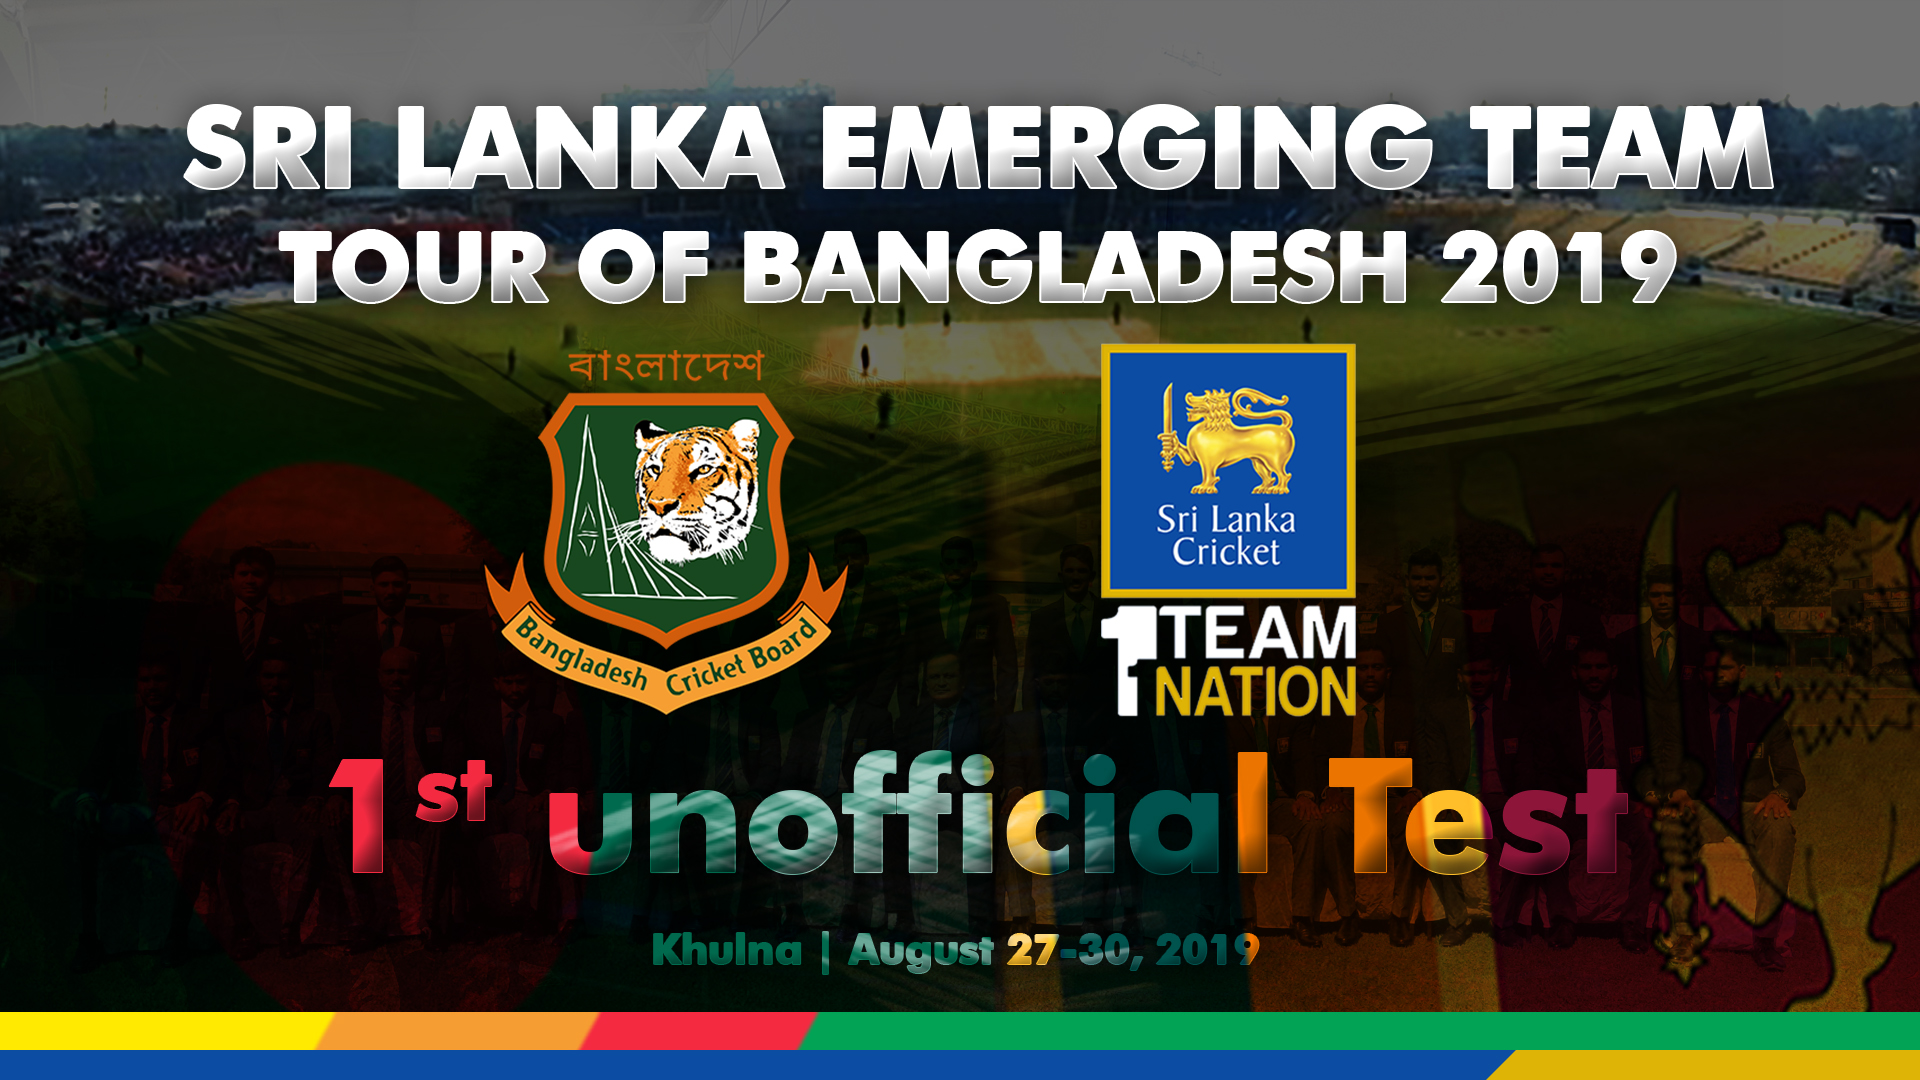 Bangladesh Emerging Team 233/4 on Shanto’s ton